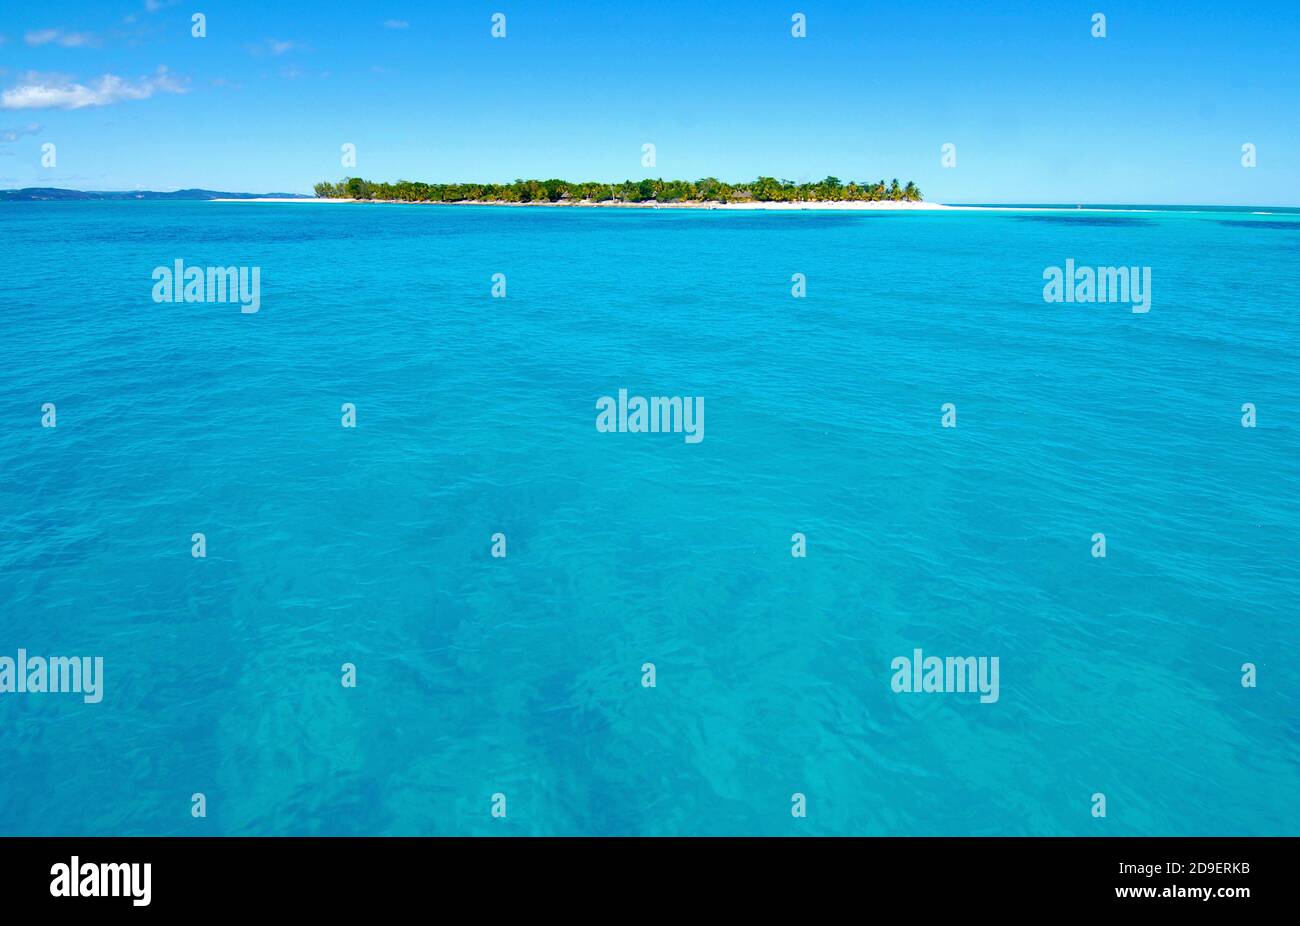 Nosy Iranja Insel mit türkisblauem Meer. Stockfoto